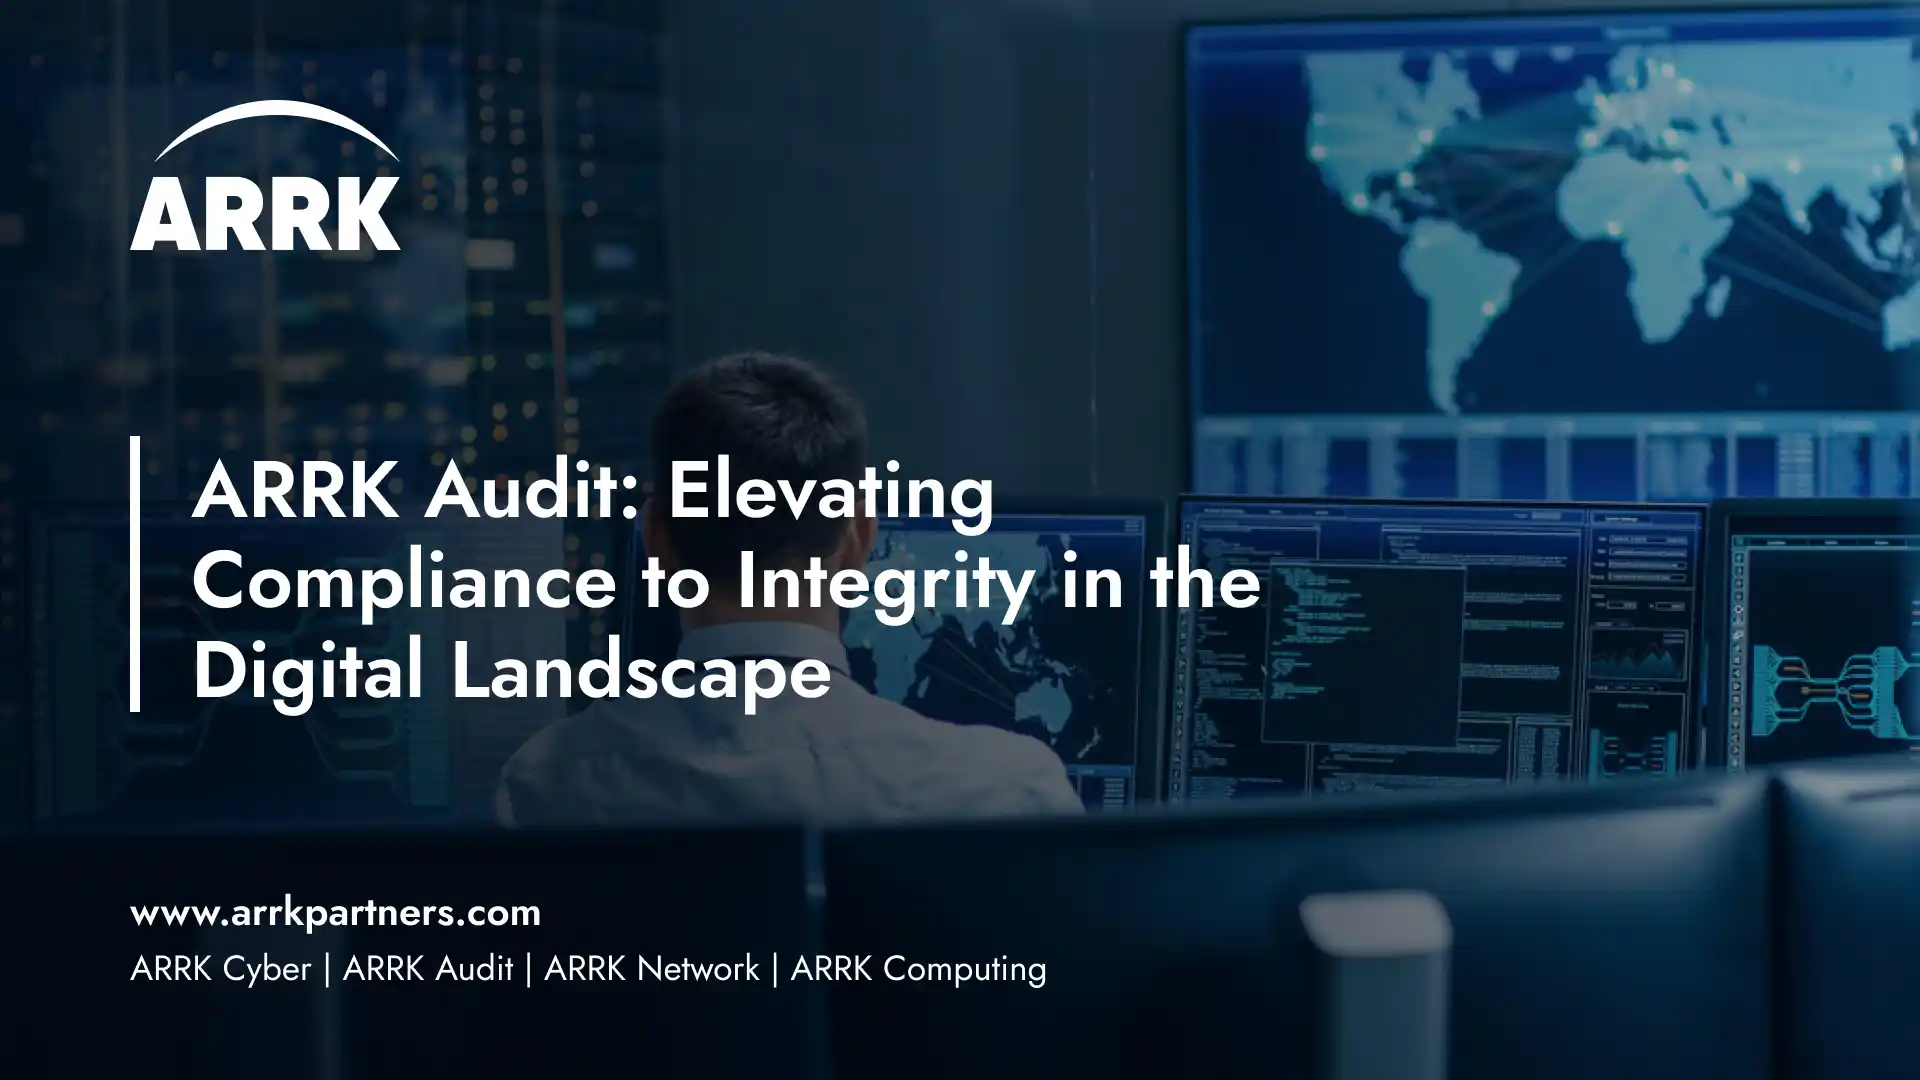 ARRK Audit: Elevating Compliance to Integrity in the Digital Landscape